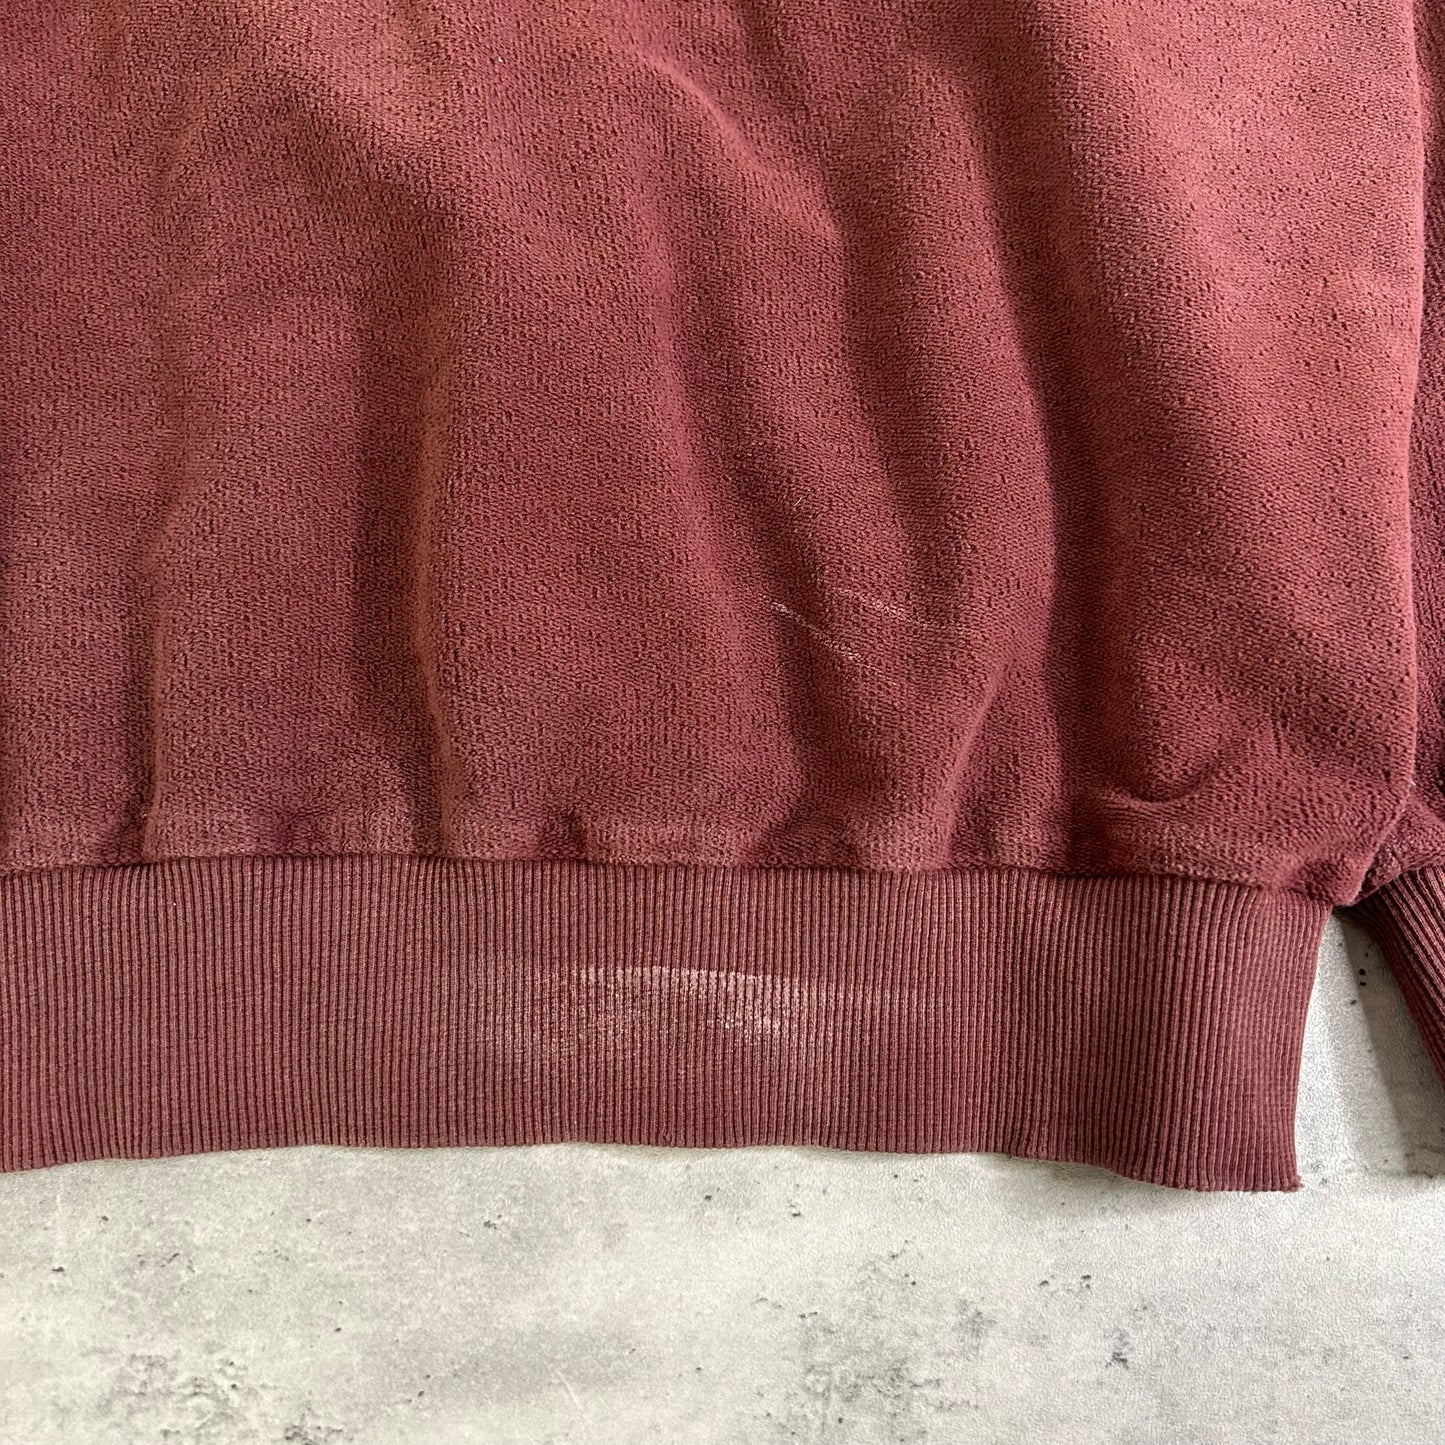 90's Roots Canada Sweatshirt size XL